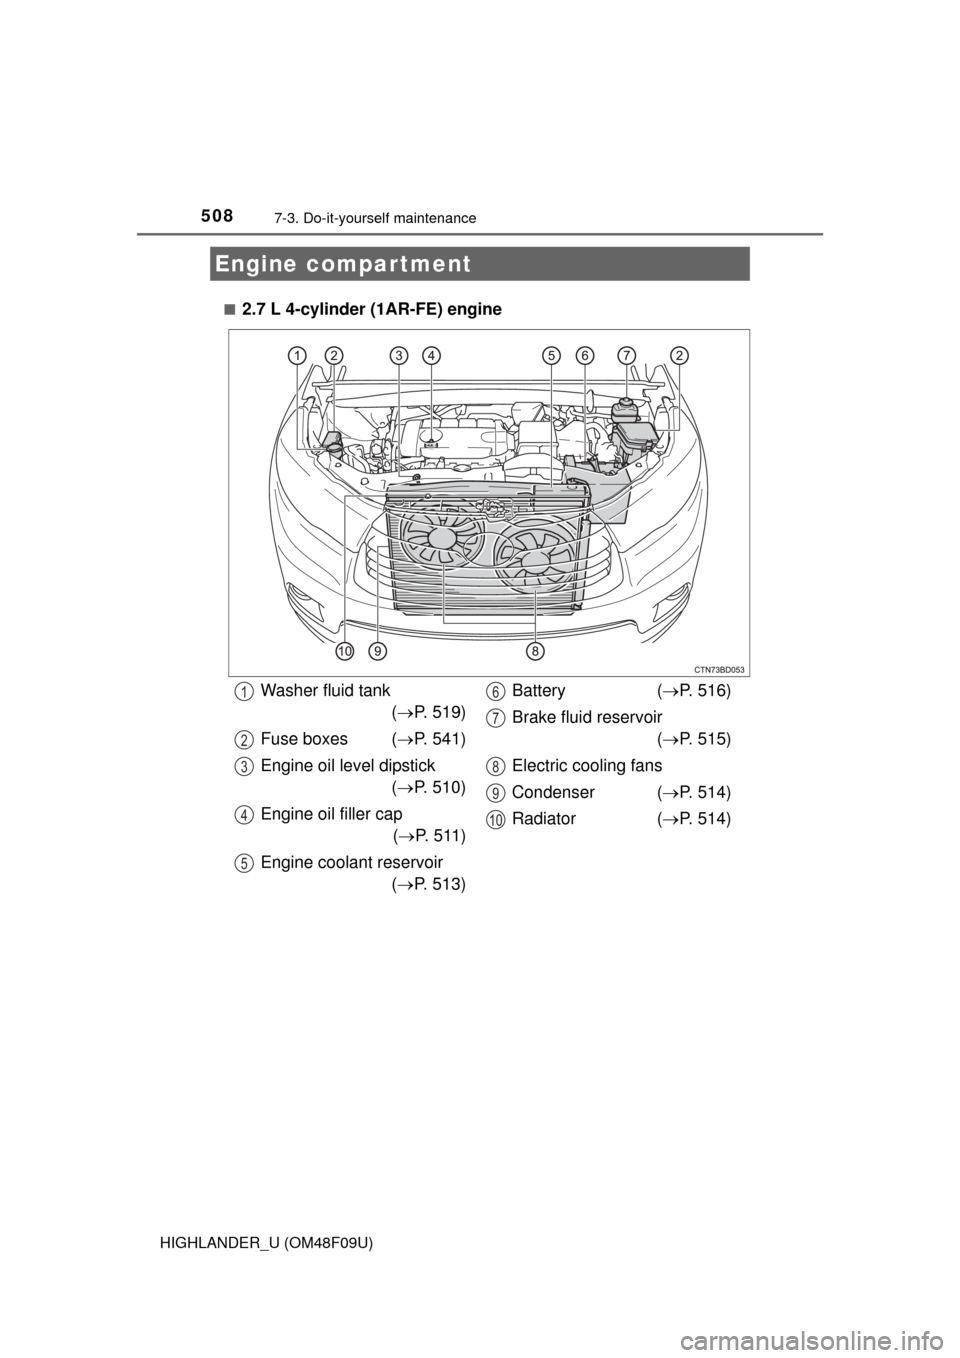 TOYOTA HIGHLANDER 2016 XU50 / 3.G Owners Manual 5087-3. Do-it-yourself maintenance
HIGHLANDER_U (OM48F09U)■
2.7 L 4-cylinder (1AR-FE) engine
Engine compartment
Washer fluid tank
( P. 519)
Fuse boxes ( P. 541)
Engine oil level dipstick ( 